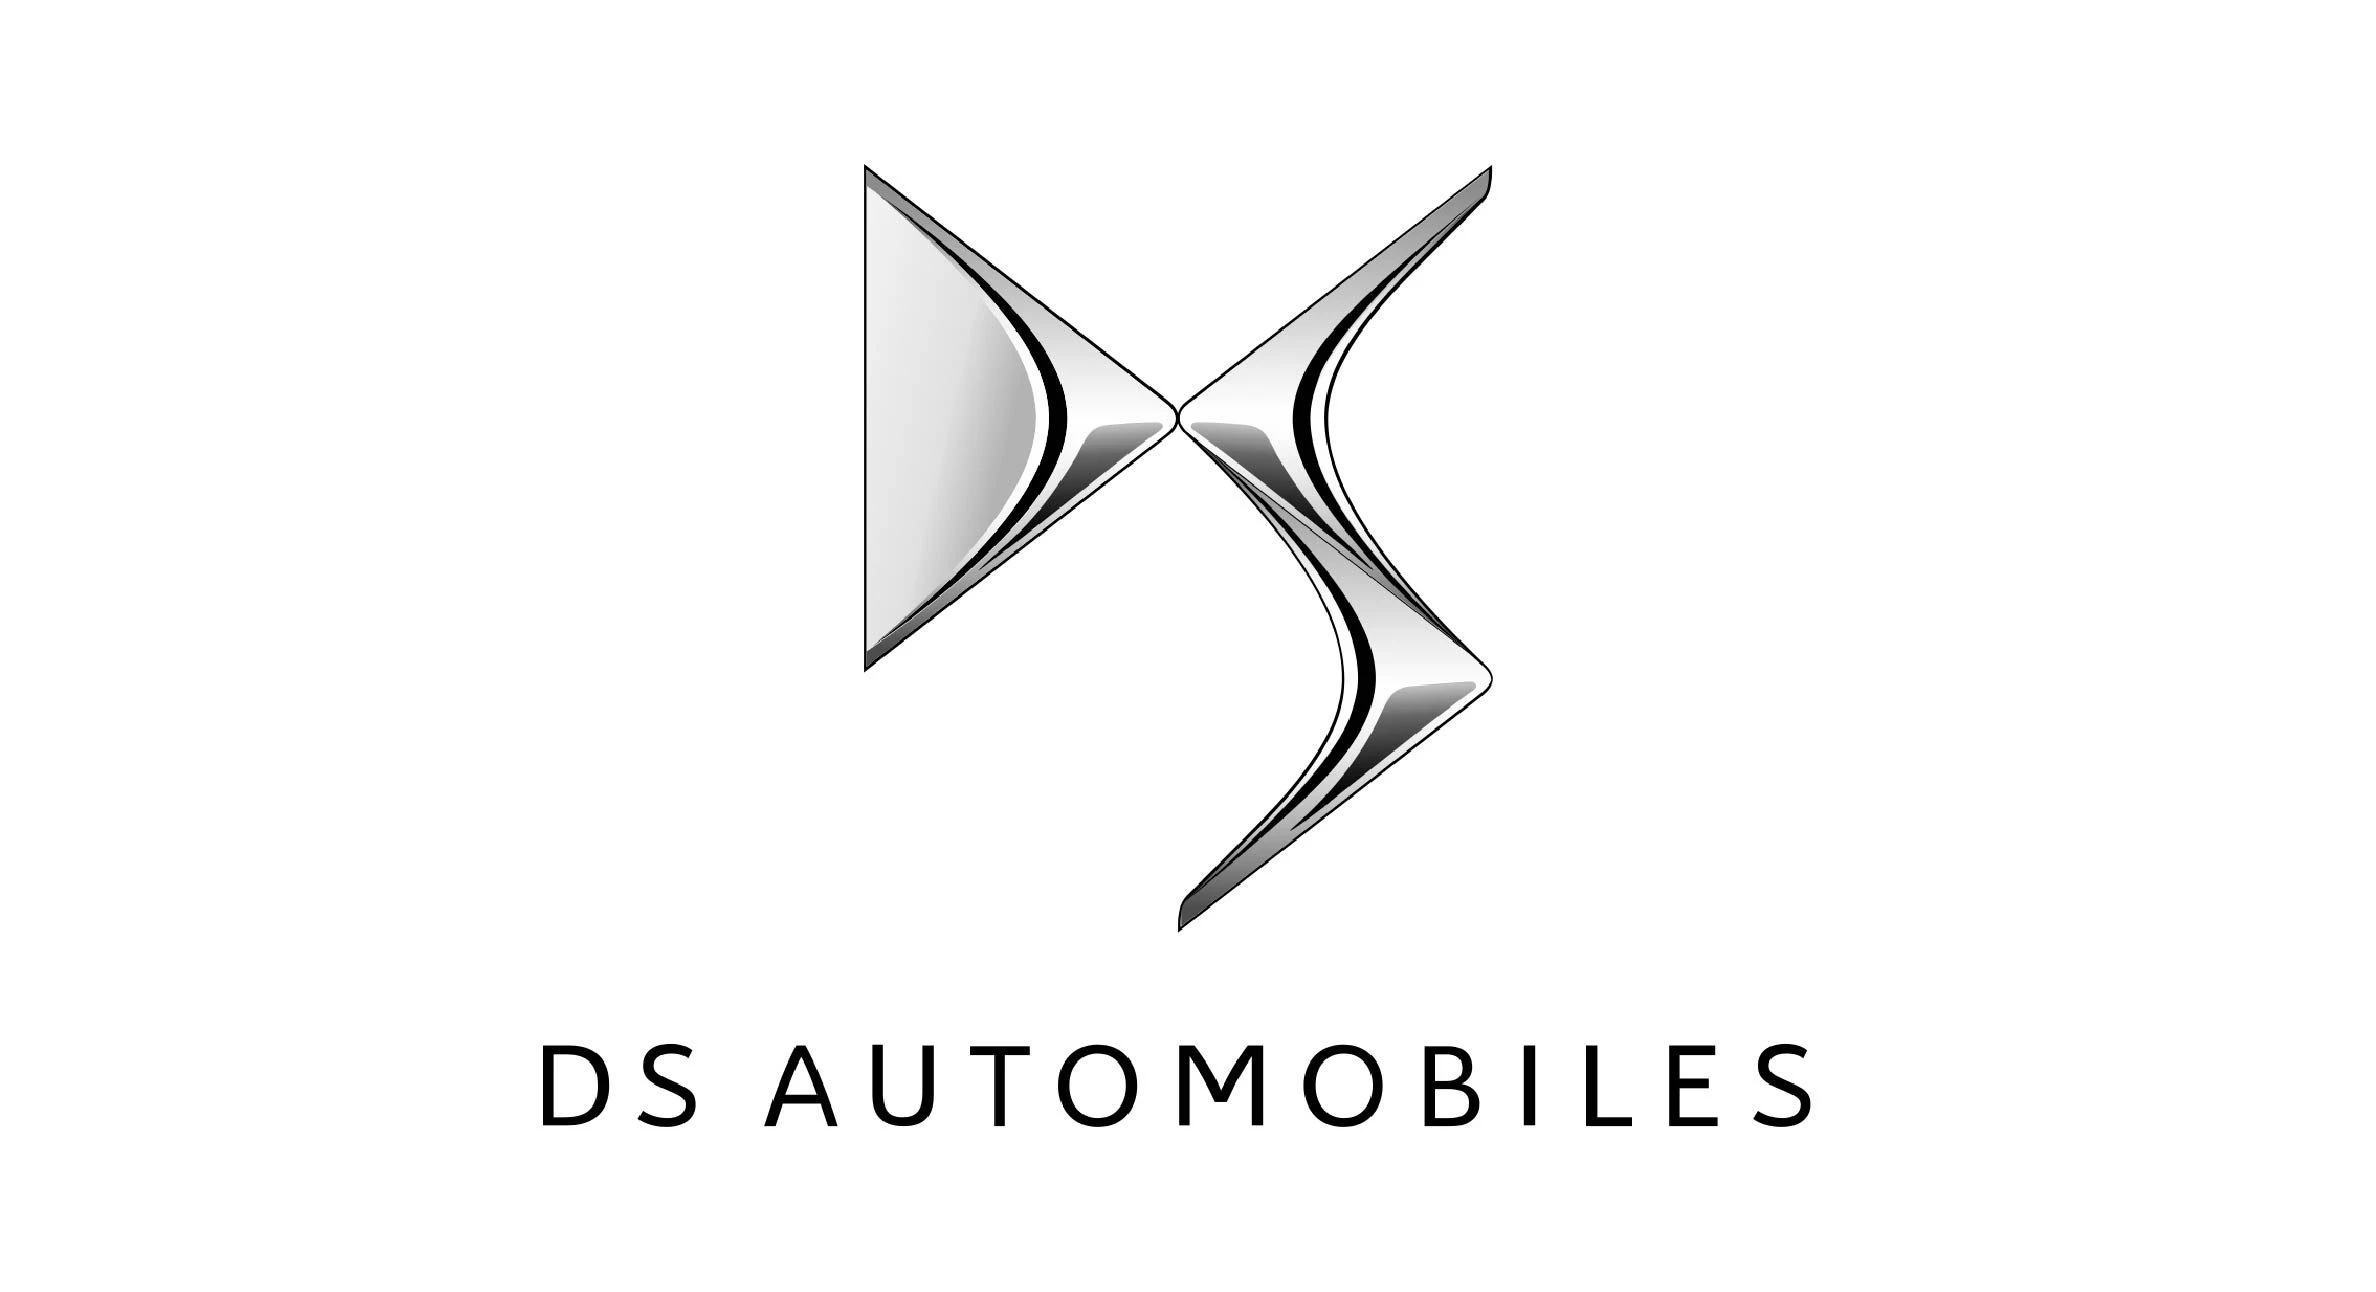 DS car brand logo